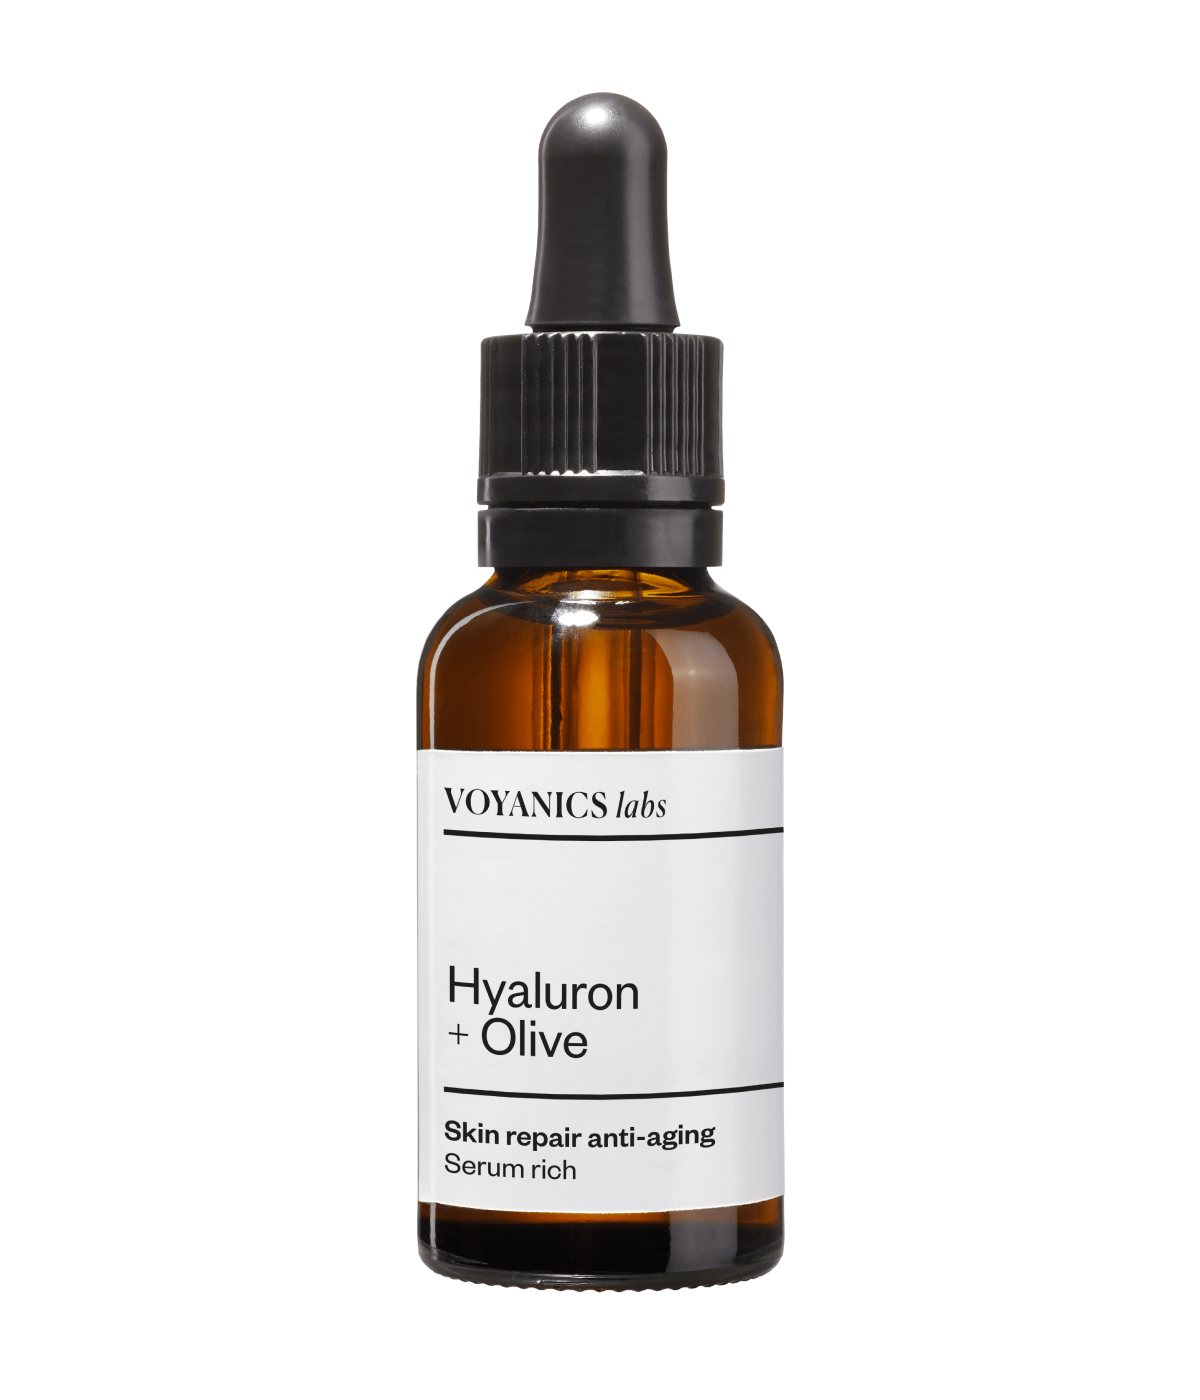 Hyaluron + Olive Skin repair anti-aging serum rich - Voyanics